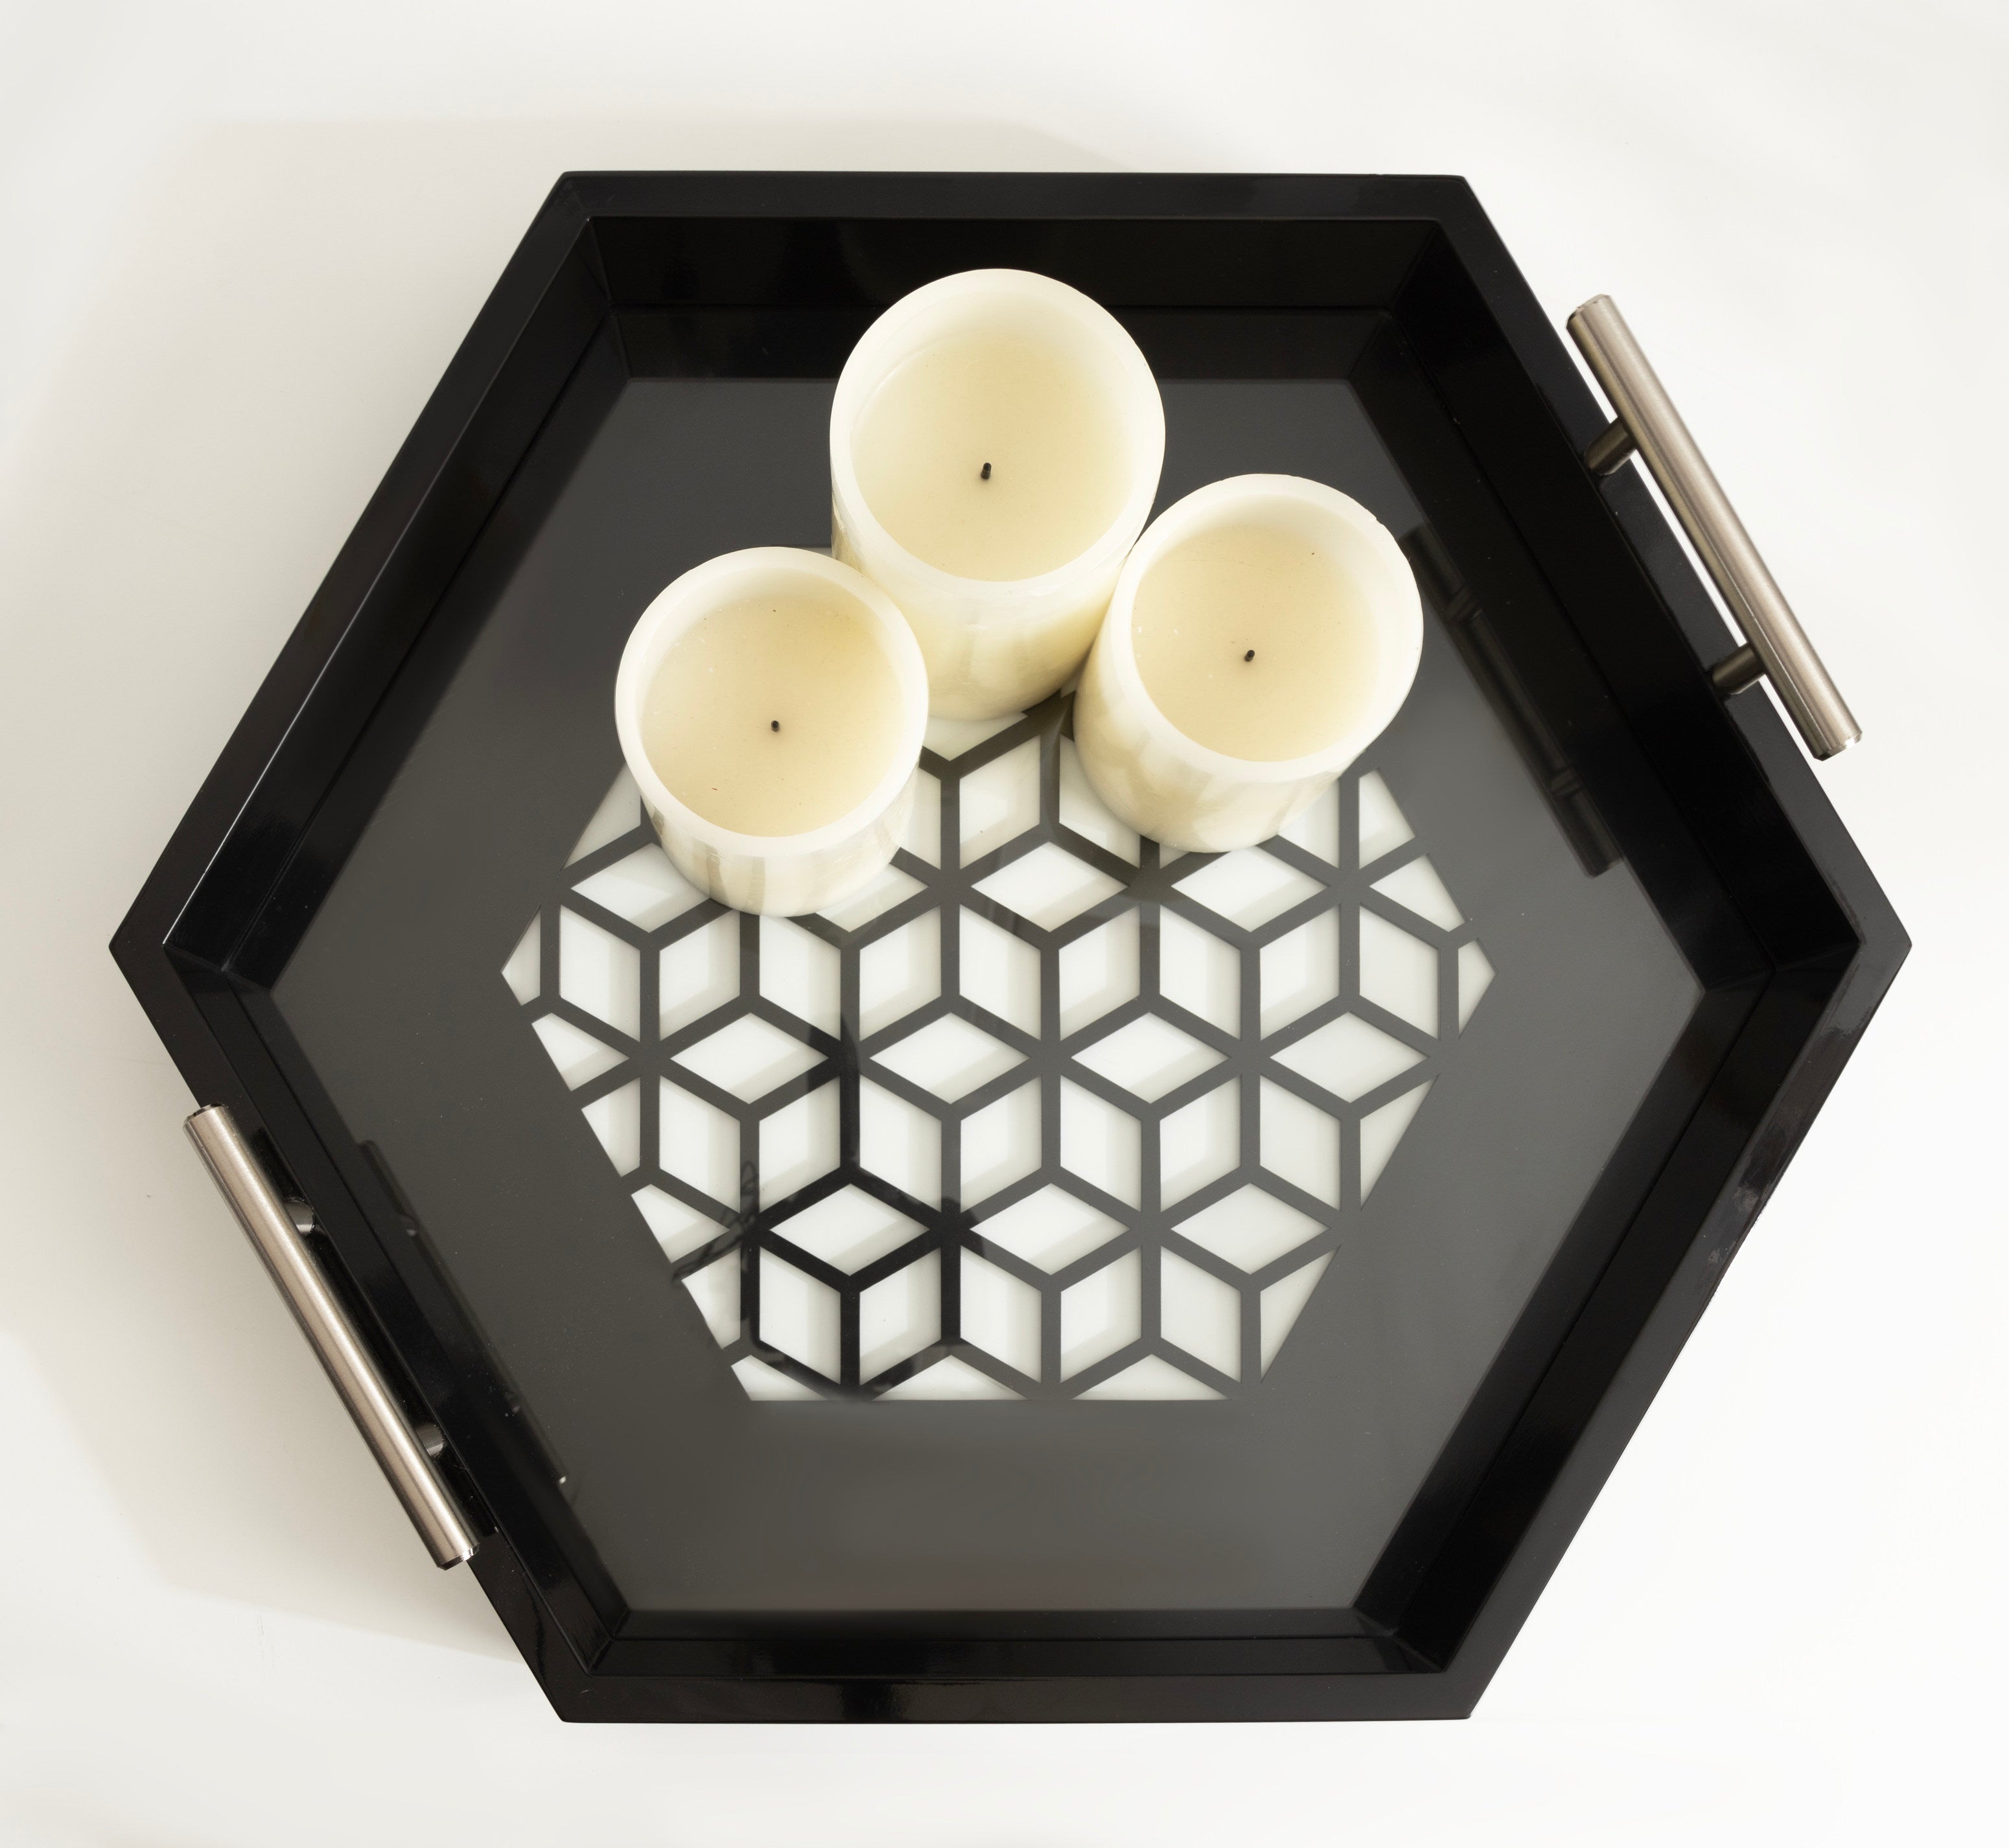 Caspen Hexagon Decorative Tray